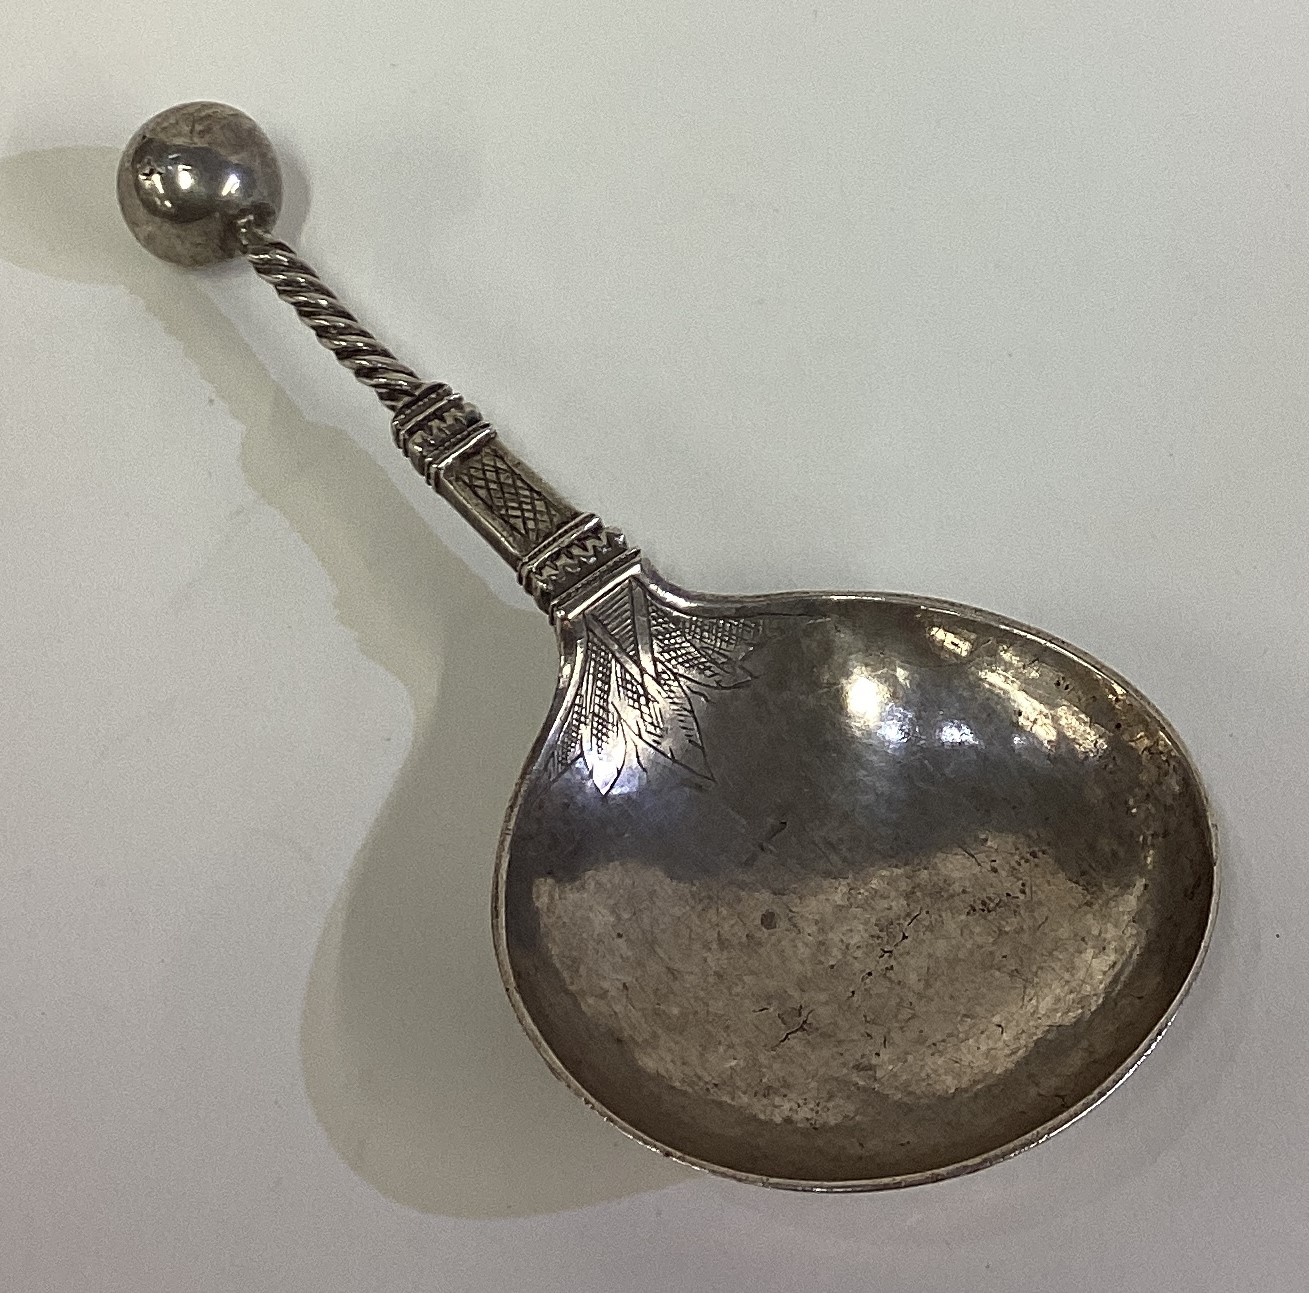 A 17th Century Scandinavian silver spoon.